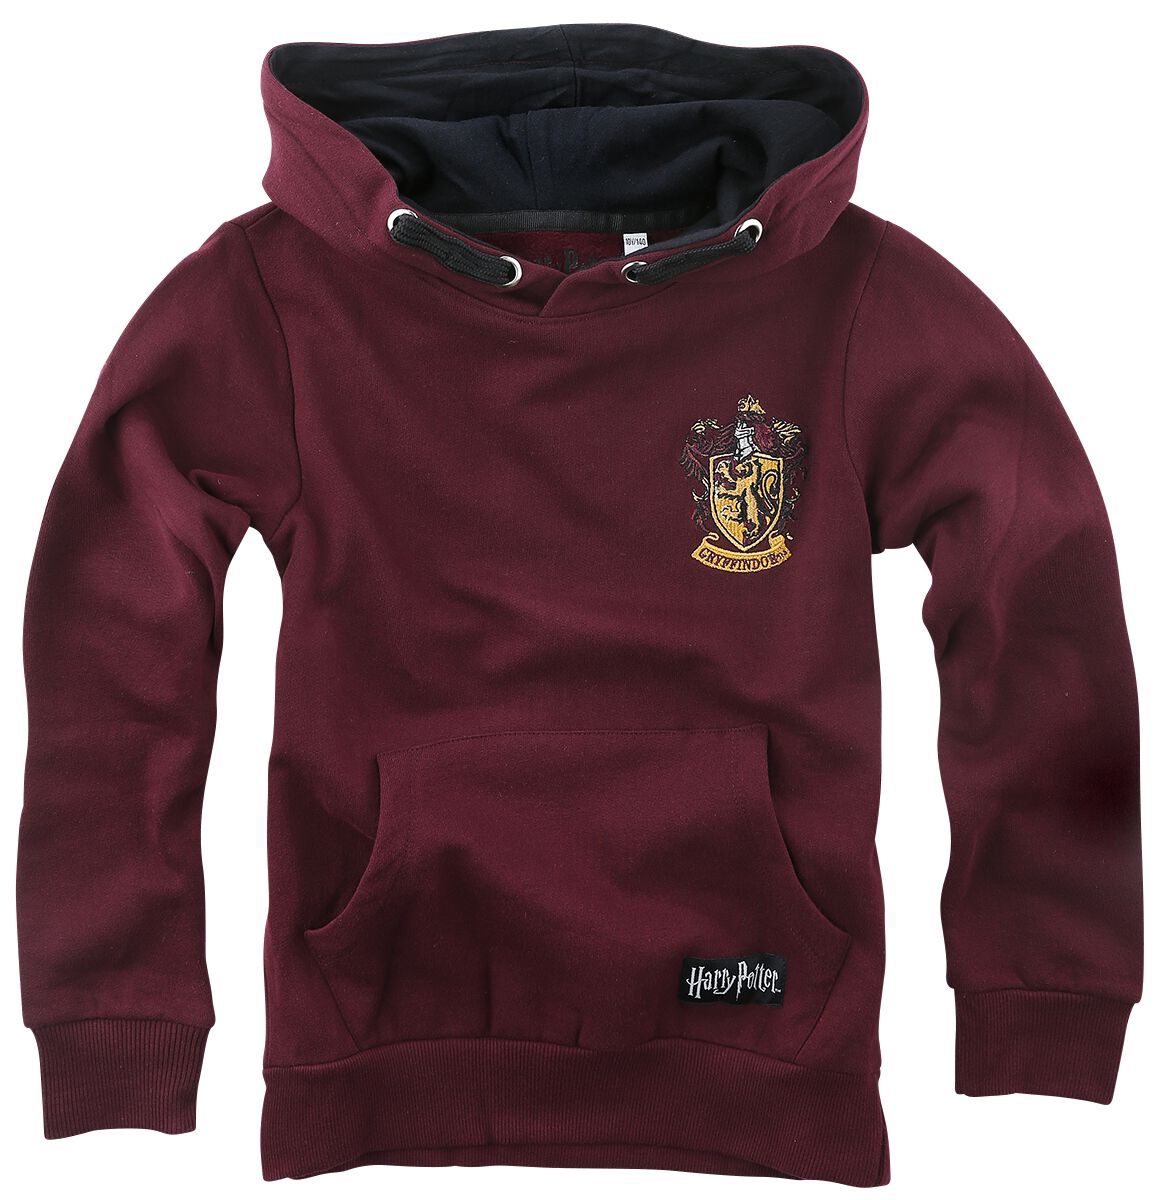 Harry Potter Kapuzenpullover - Kids - Gryffindor - 116 - Größe 116 - bordeaux  - EMP exklusives Merchandise!